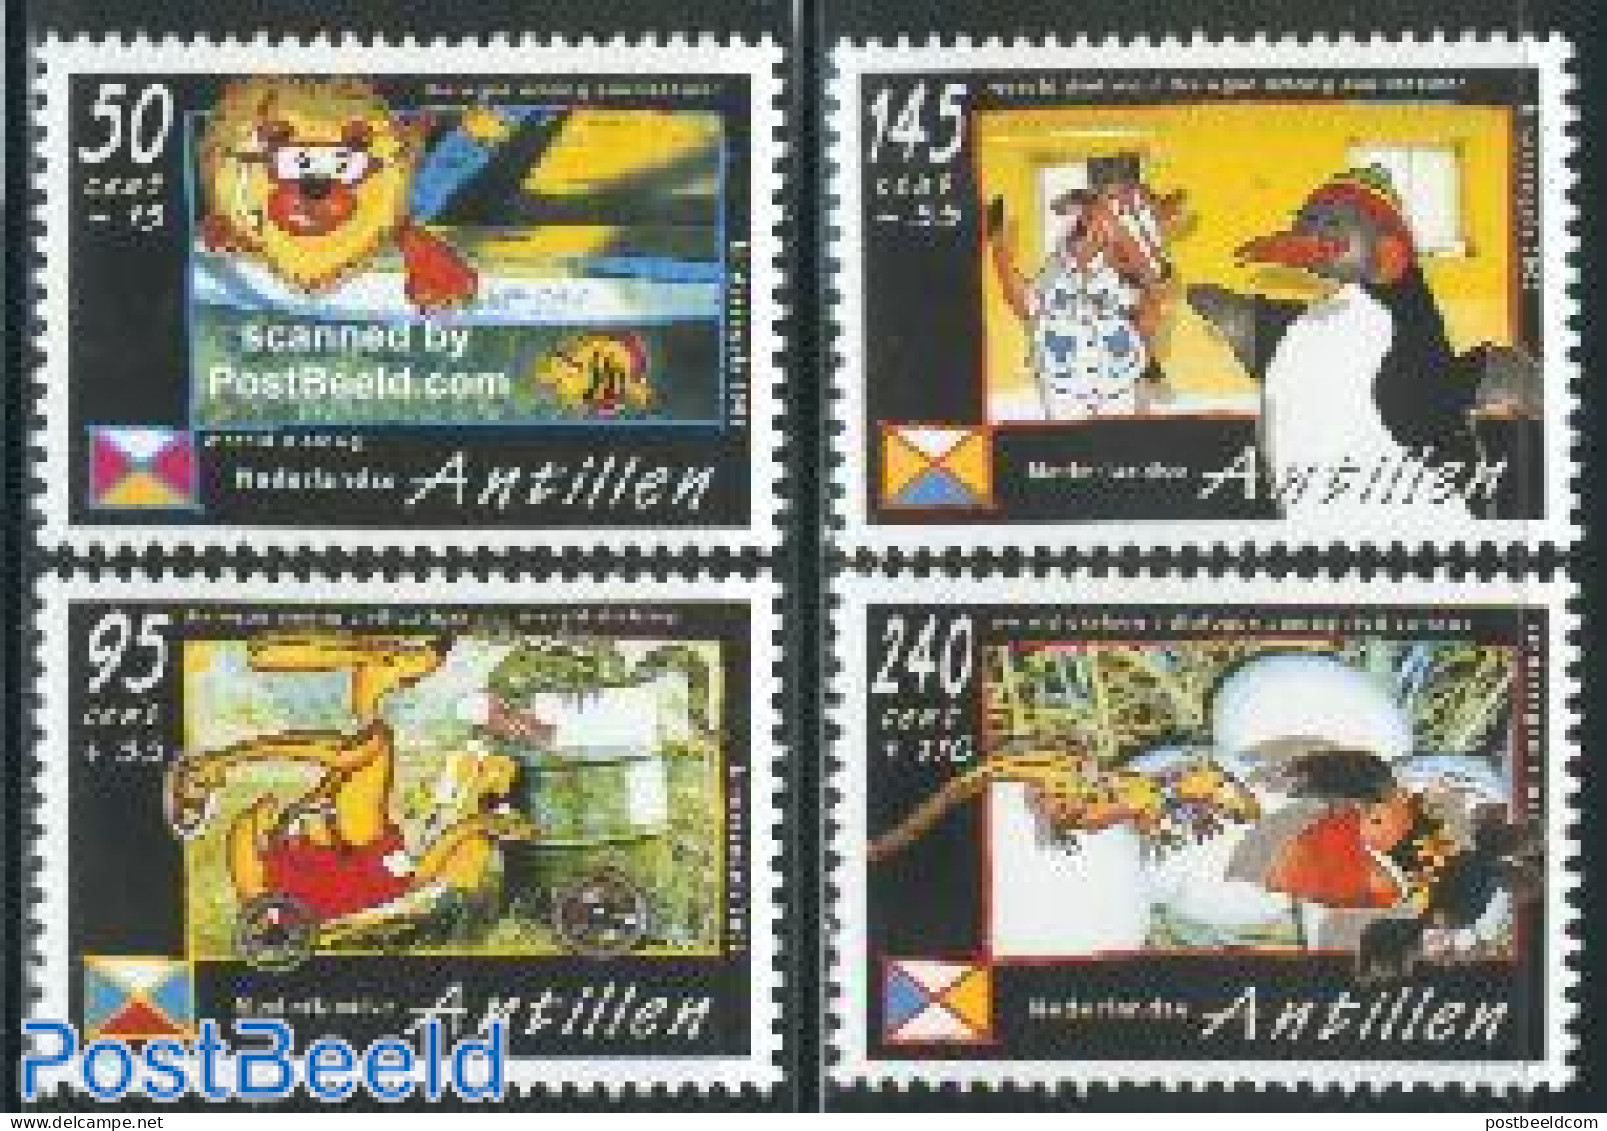 Netherlands Antilles 2002 Child Welfare 4v, Mint NH, Nature - Environment - Fish - Penguins - Art - Comics (except Dis.. - Environment & Climate Protection